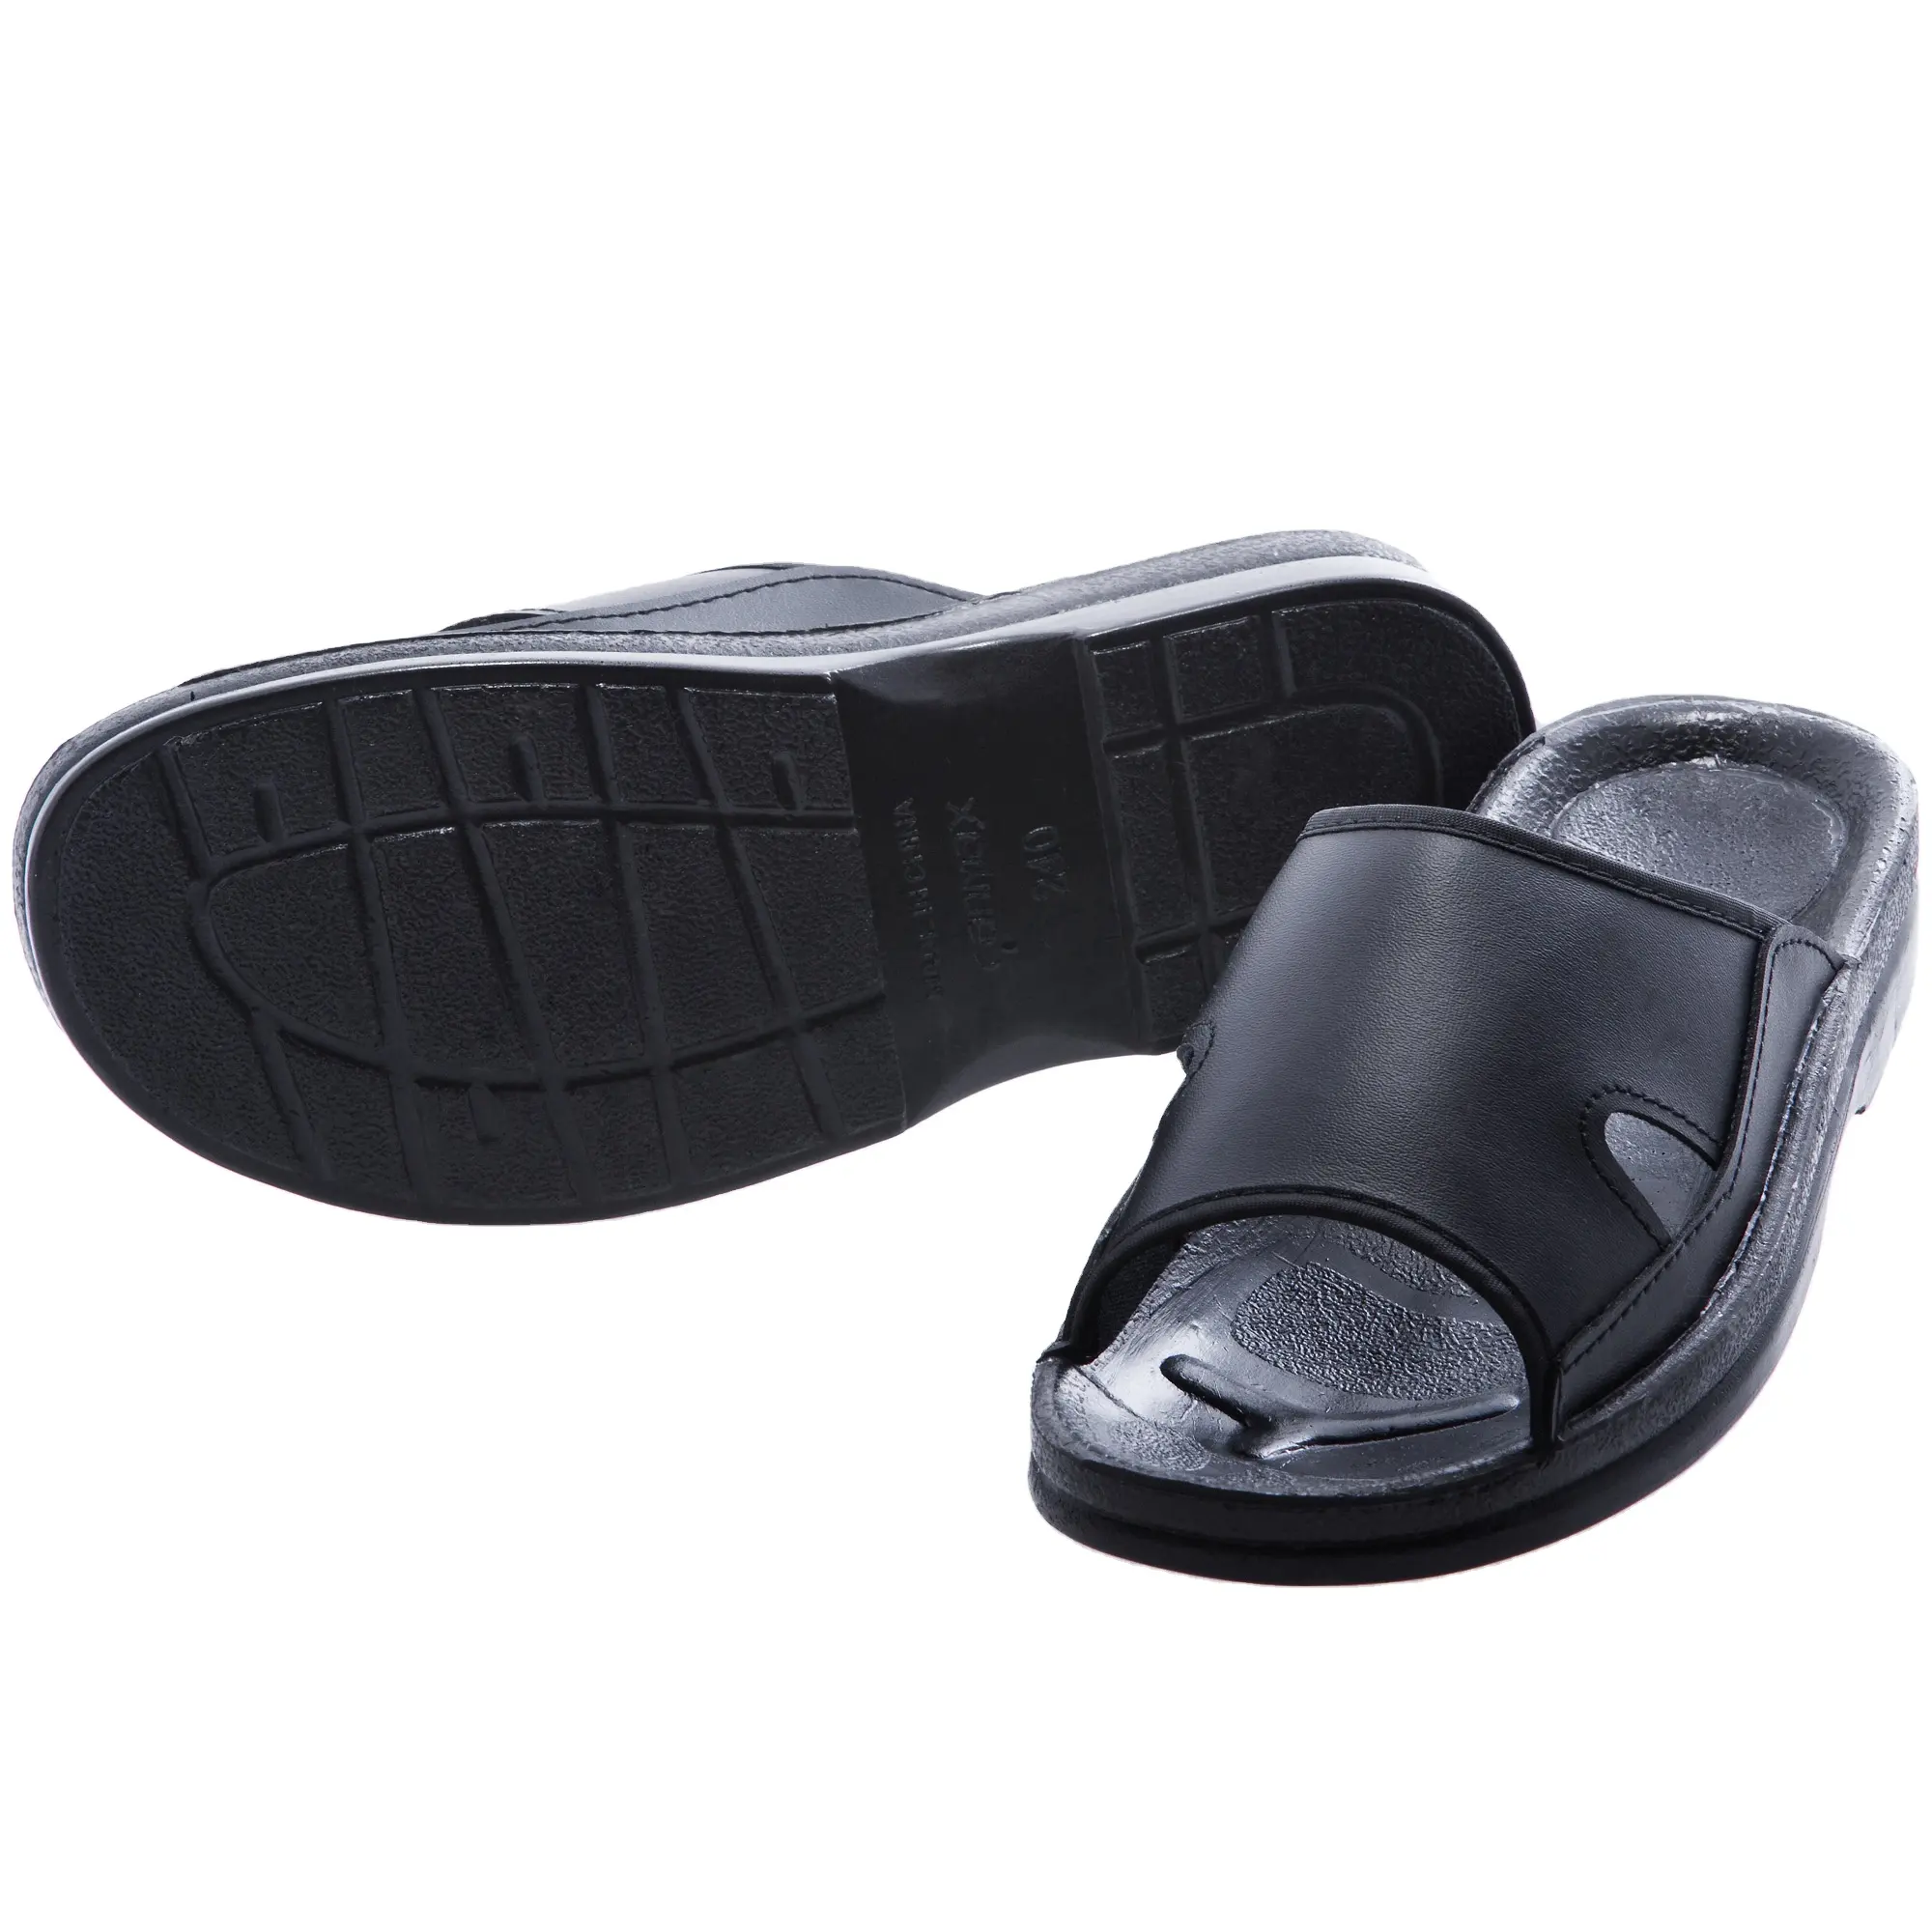 CANMAX 핫 세일 청정실을 위한 정전기 방지 슬리퍼 Esd 안전 신발